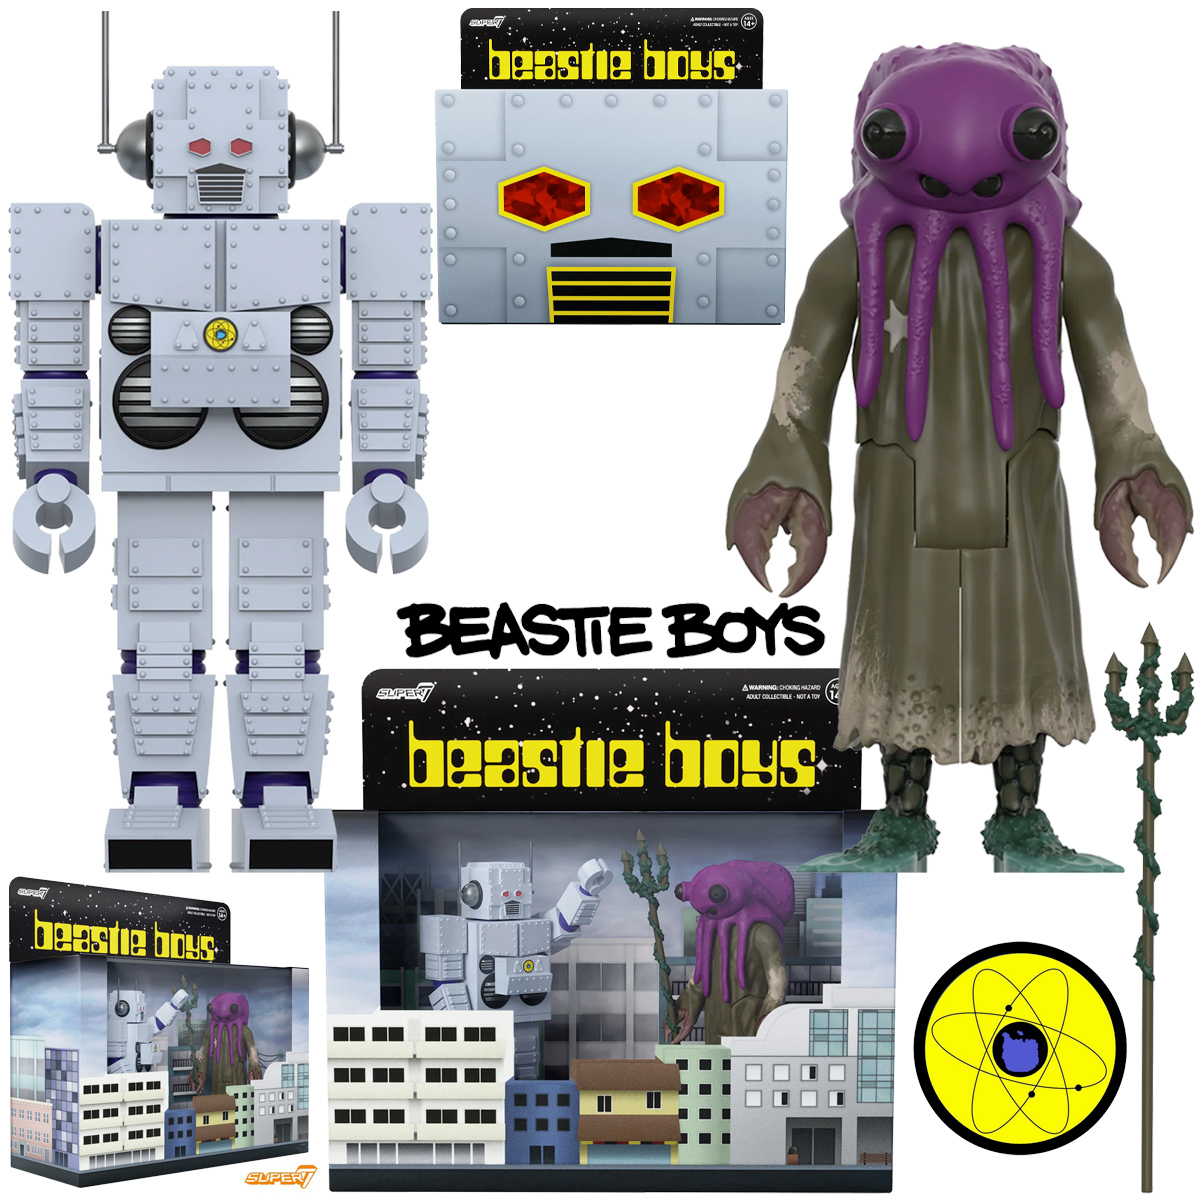 Beastie Boys “Intergalactic” ReAction Action Figures